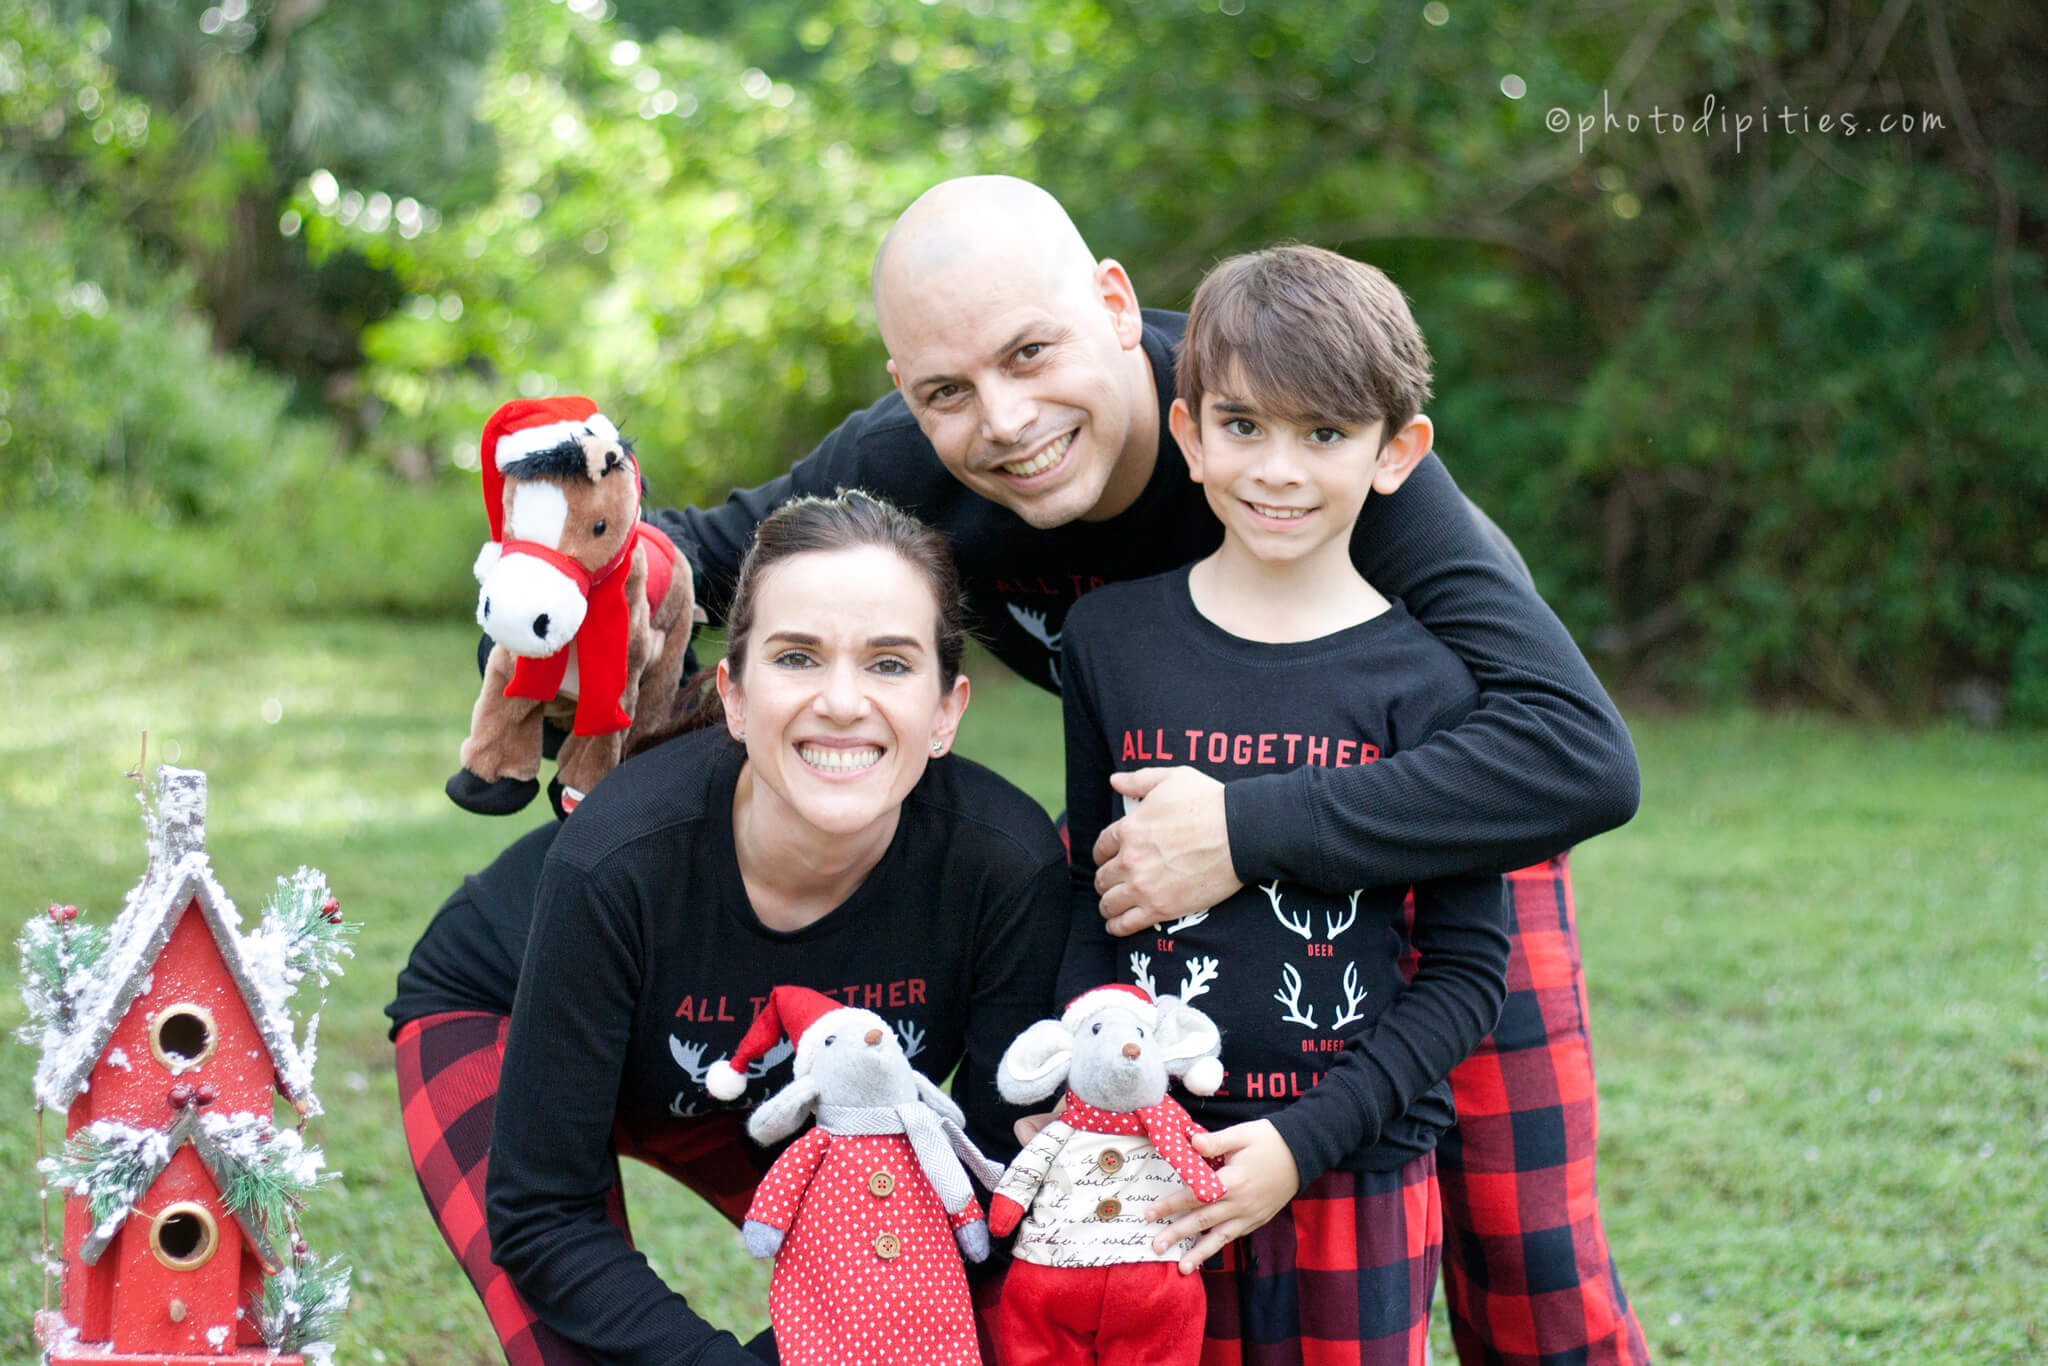 Photodipities Family | Family Photography | Christmas Mini Session